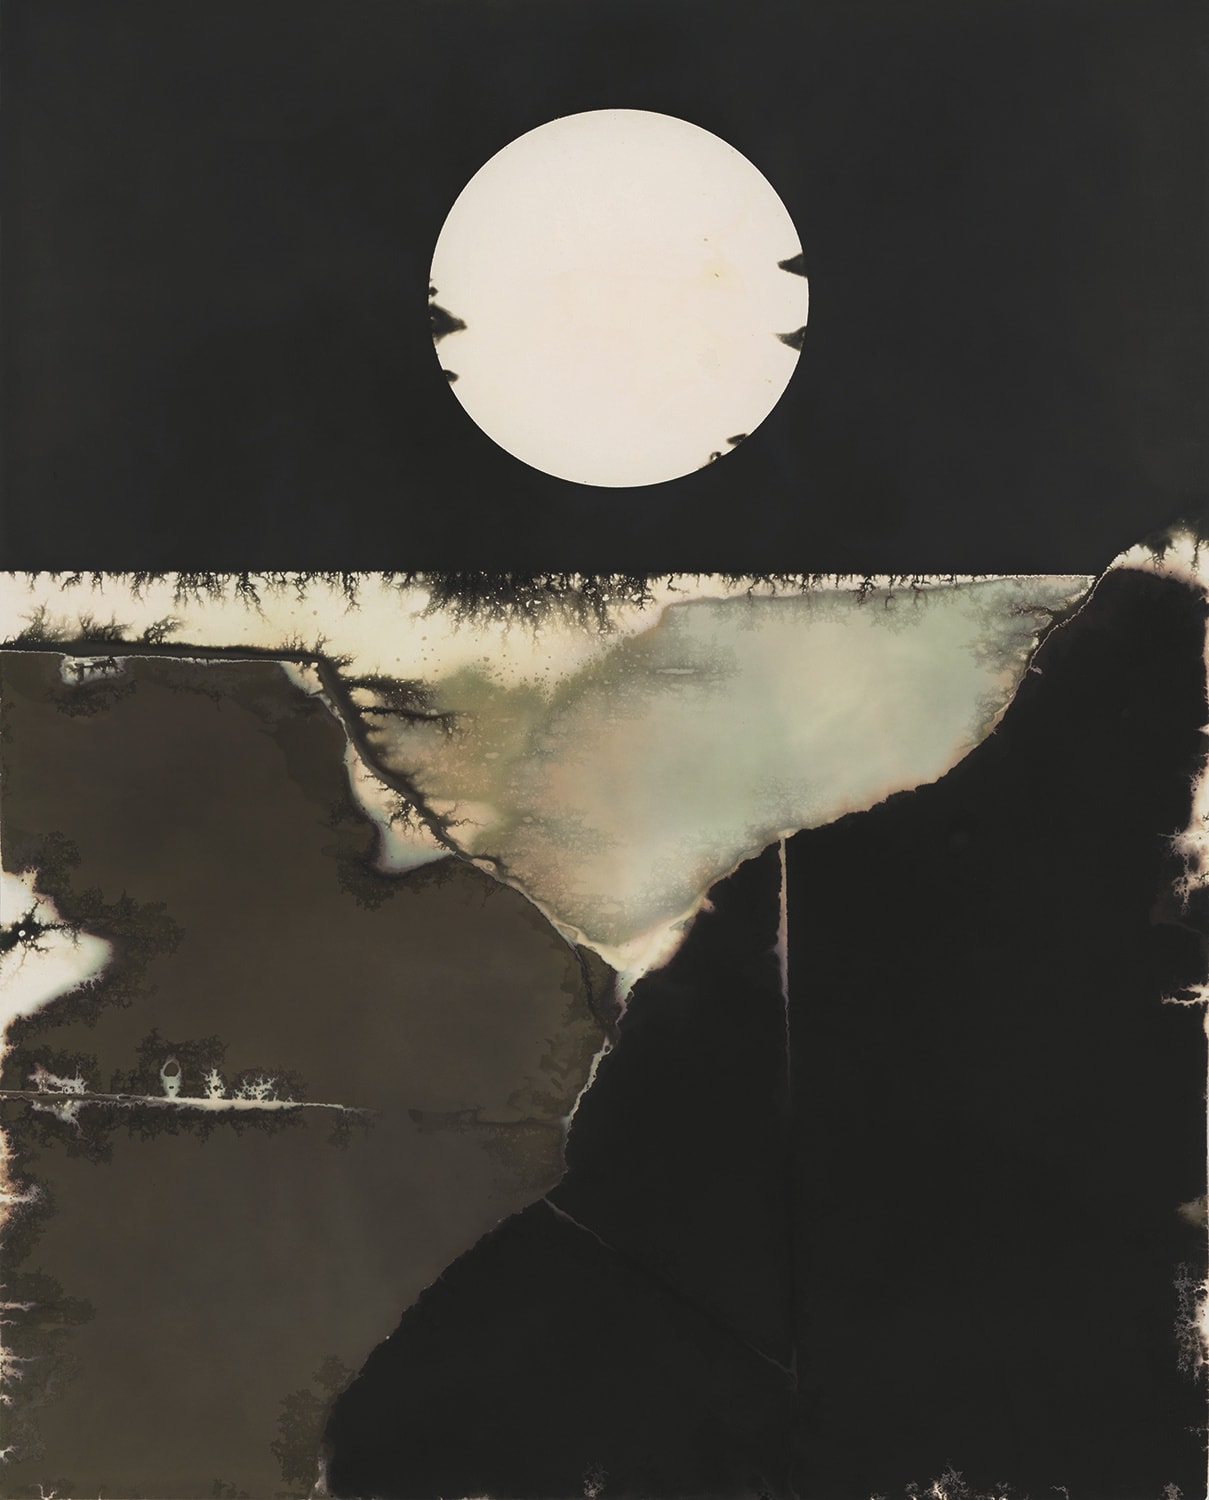 Claire A. Warden, 99 Moons, No. 237, 2022 | Etherton Gallery